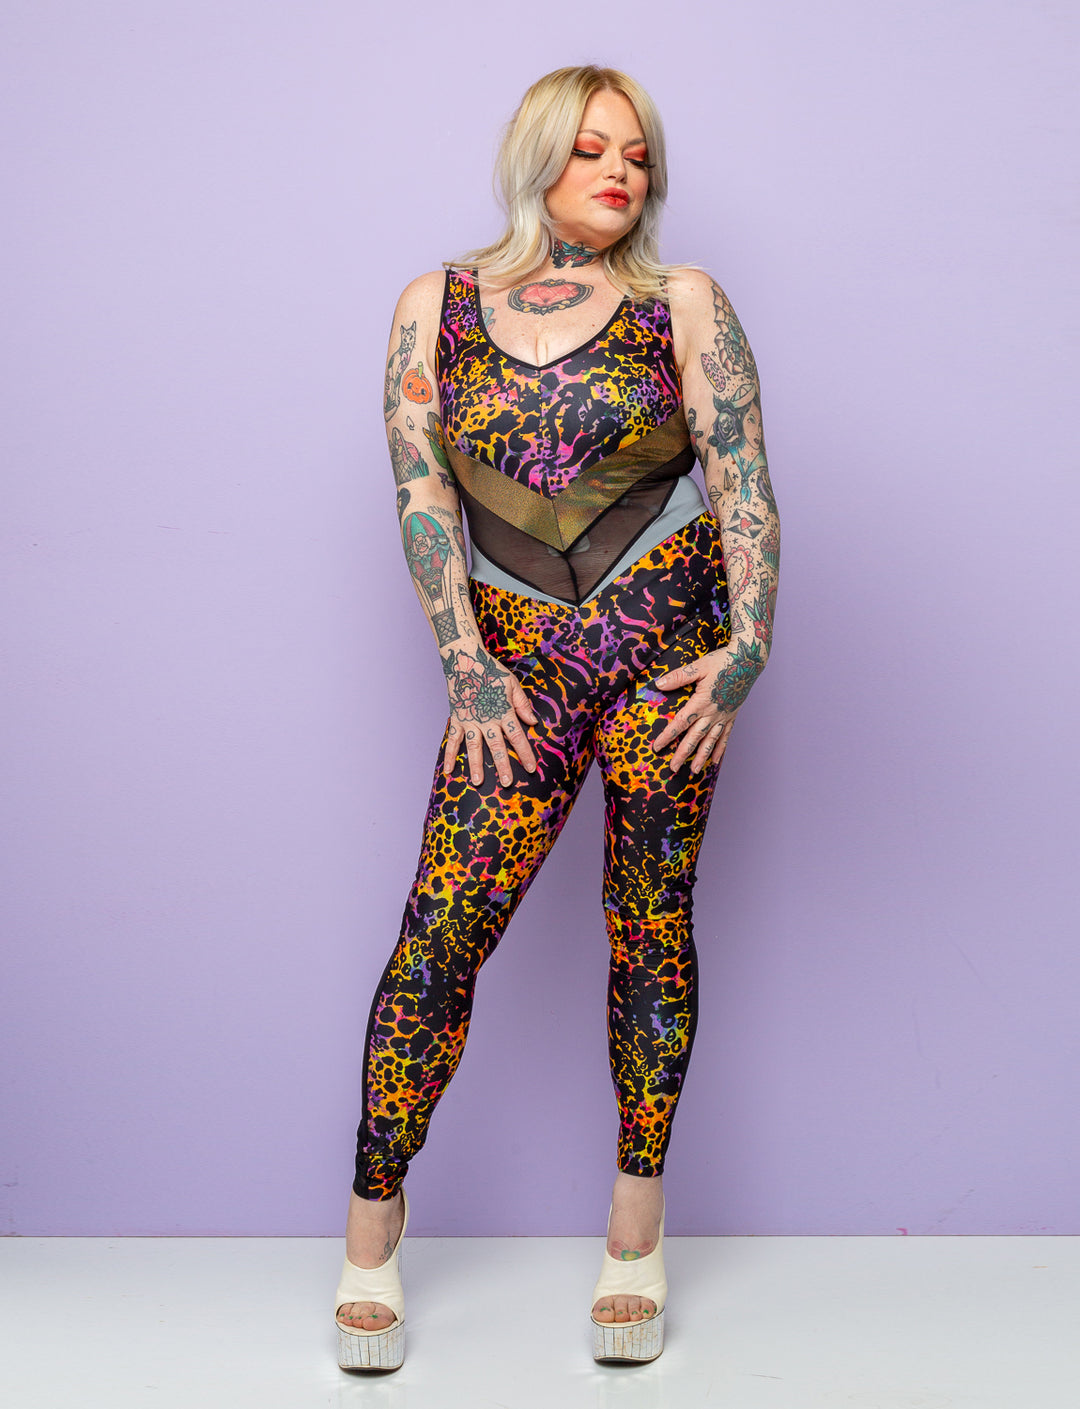 Woman modelling a purple leopard print lycra catsuit.